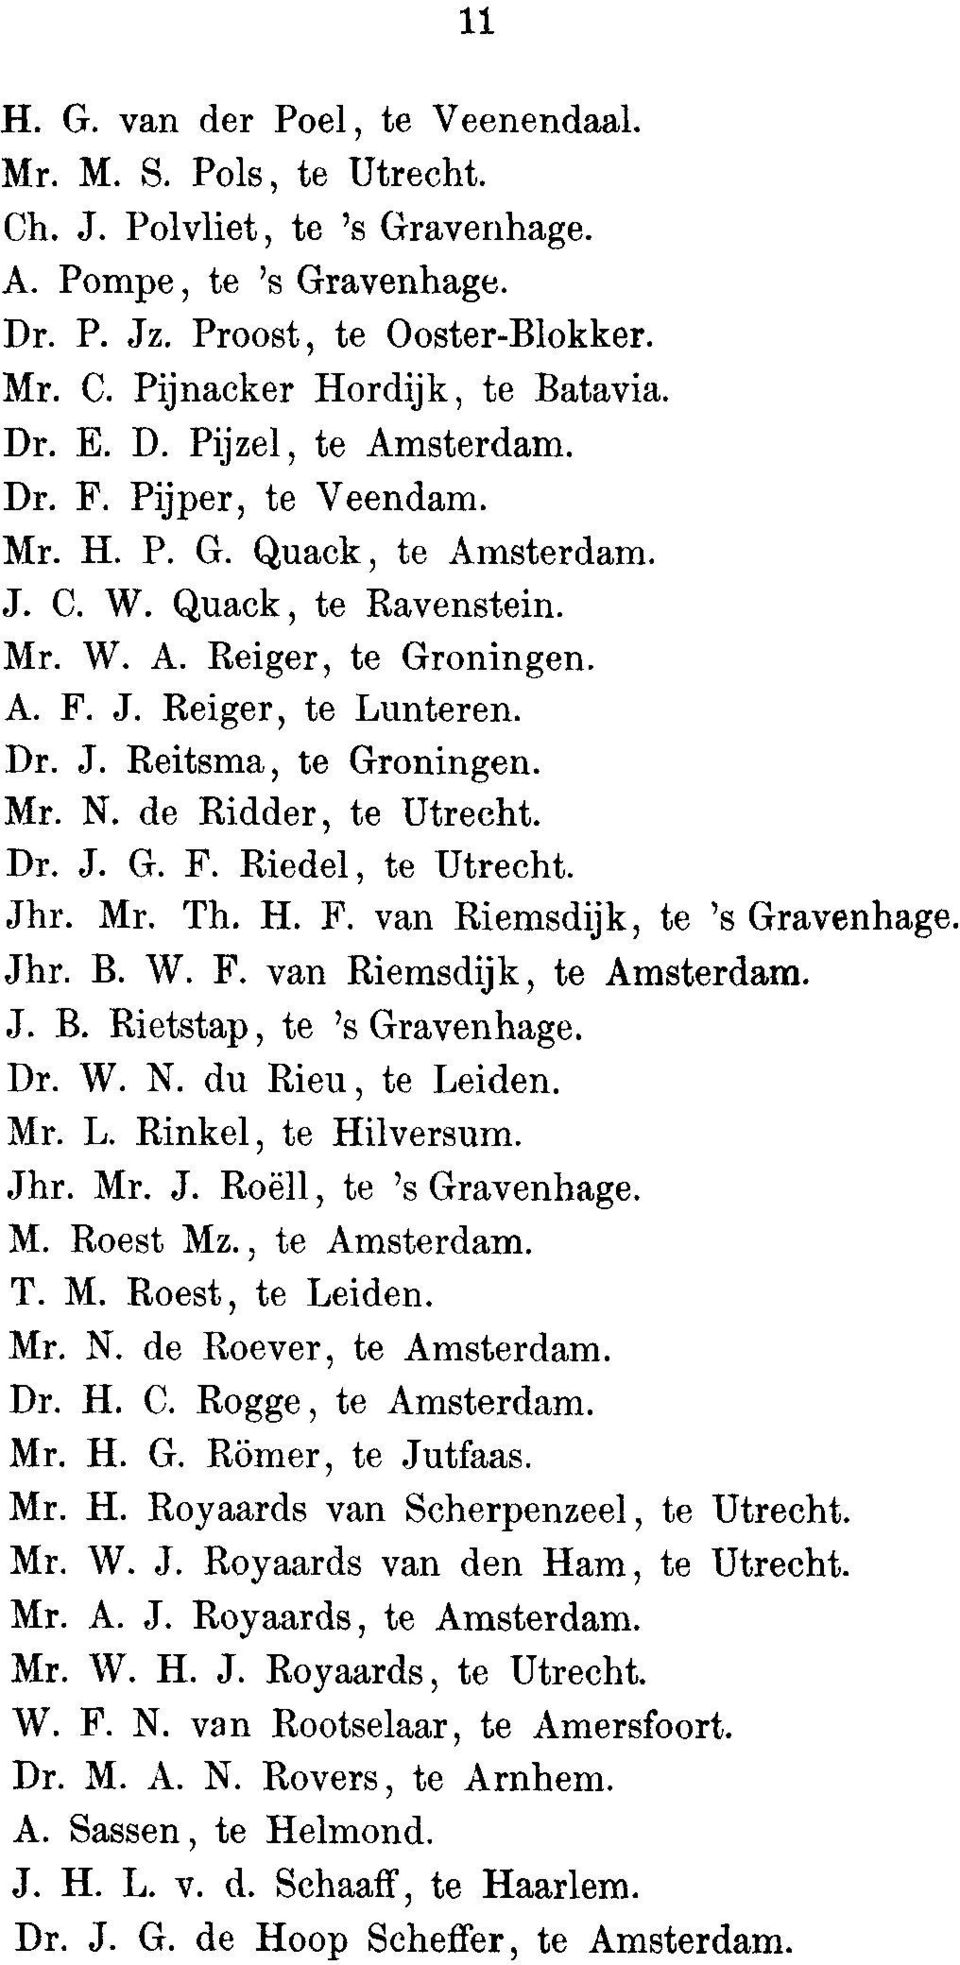 Mr. N. de Ridder, to Utrecht. Dr. J. G. F. Riedel, to Utrecht. Jhr. Mr. Th. H. F. van Riemsdijk, to 's Gravenhage. Jhr. B. W. F. van Riemsdijk, to Amsterdam. J. B. Rietstap, to 's Gravenhage. Dr. W. N. du Rieu, to Leiden.